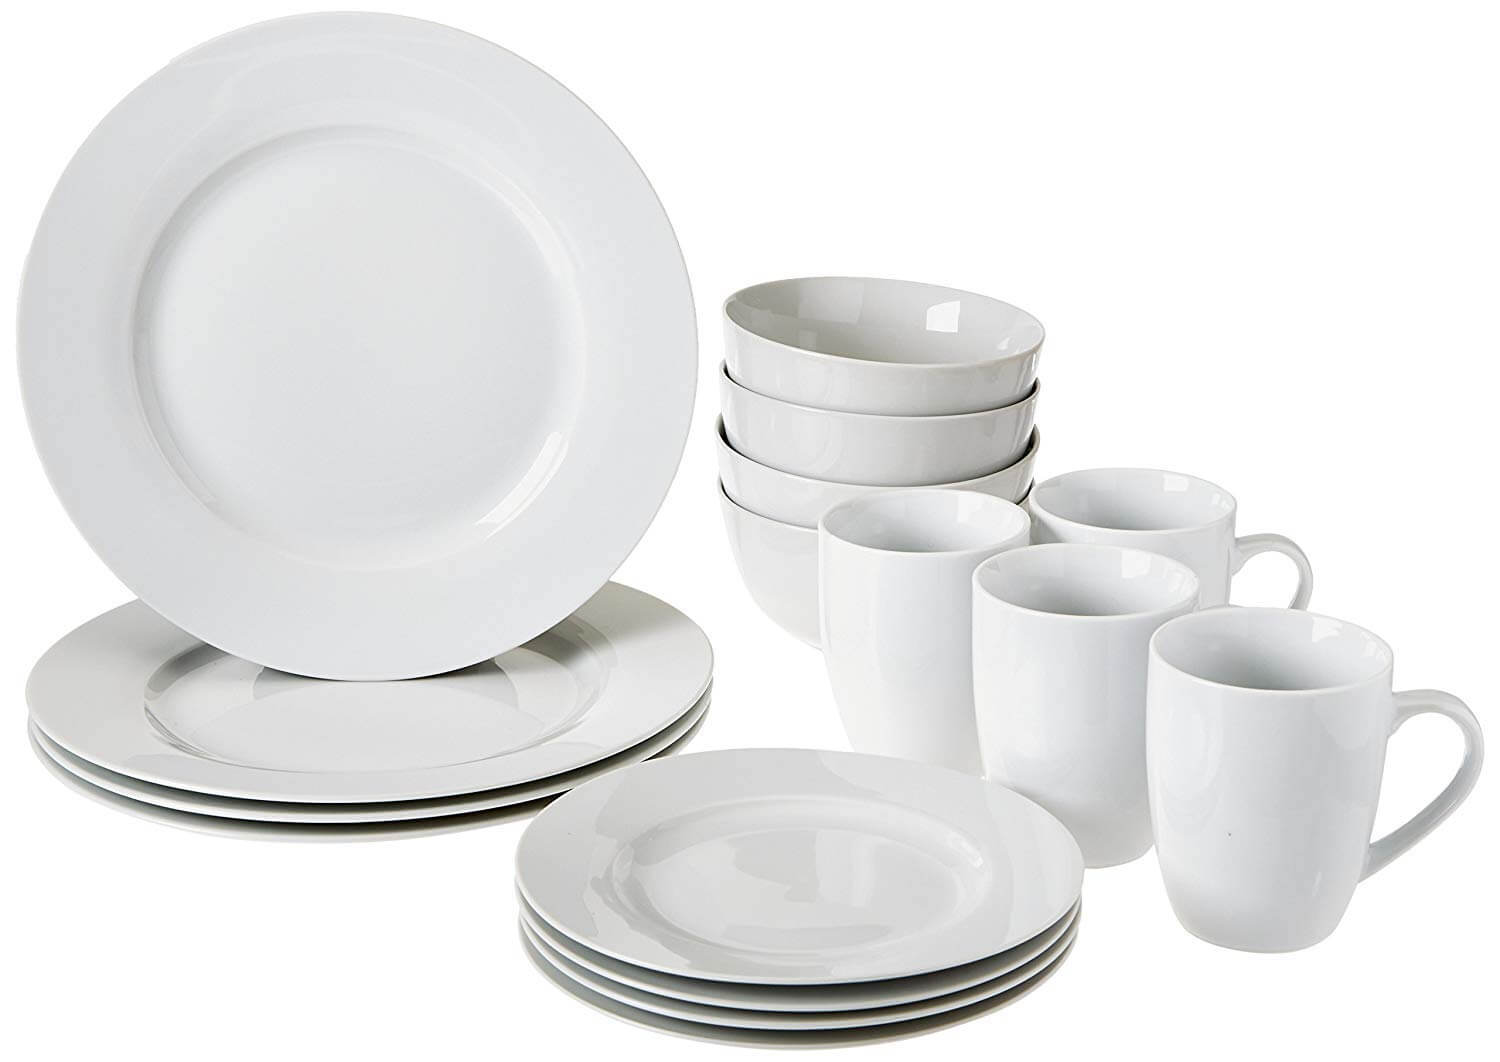 AmazonBasics White 16 Piece Dinnerware Set